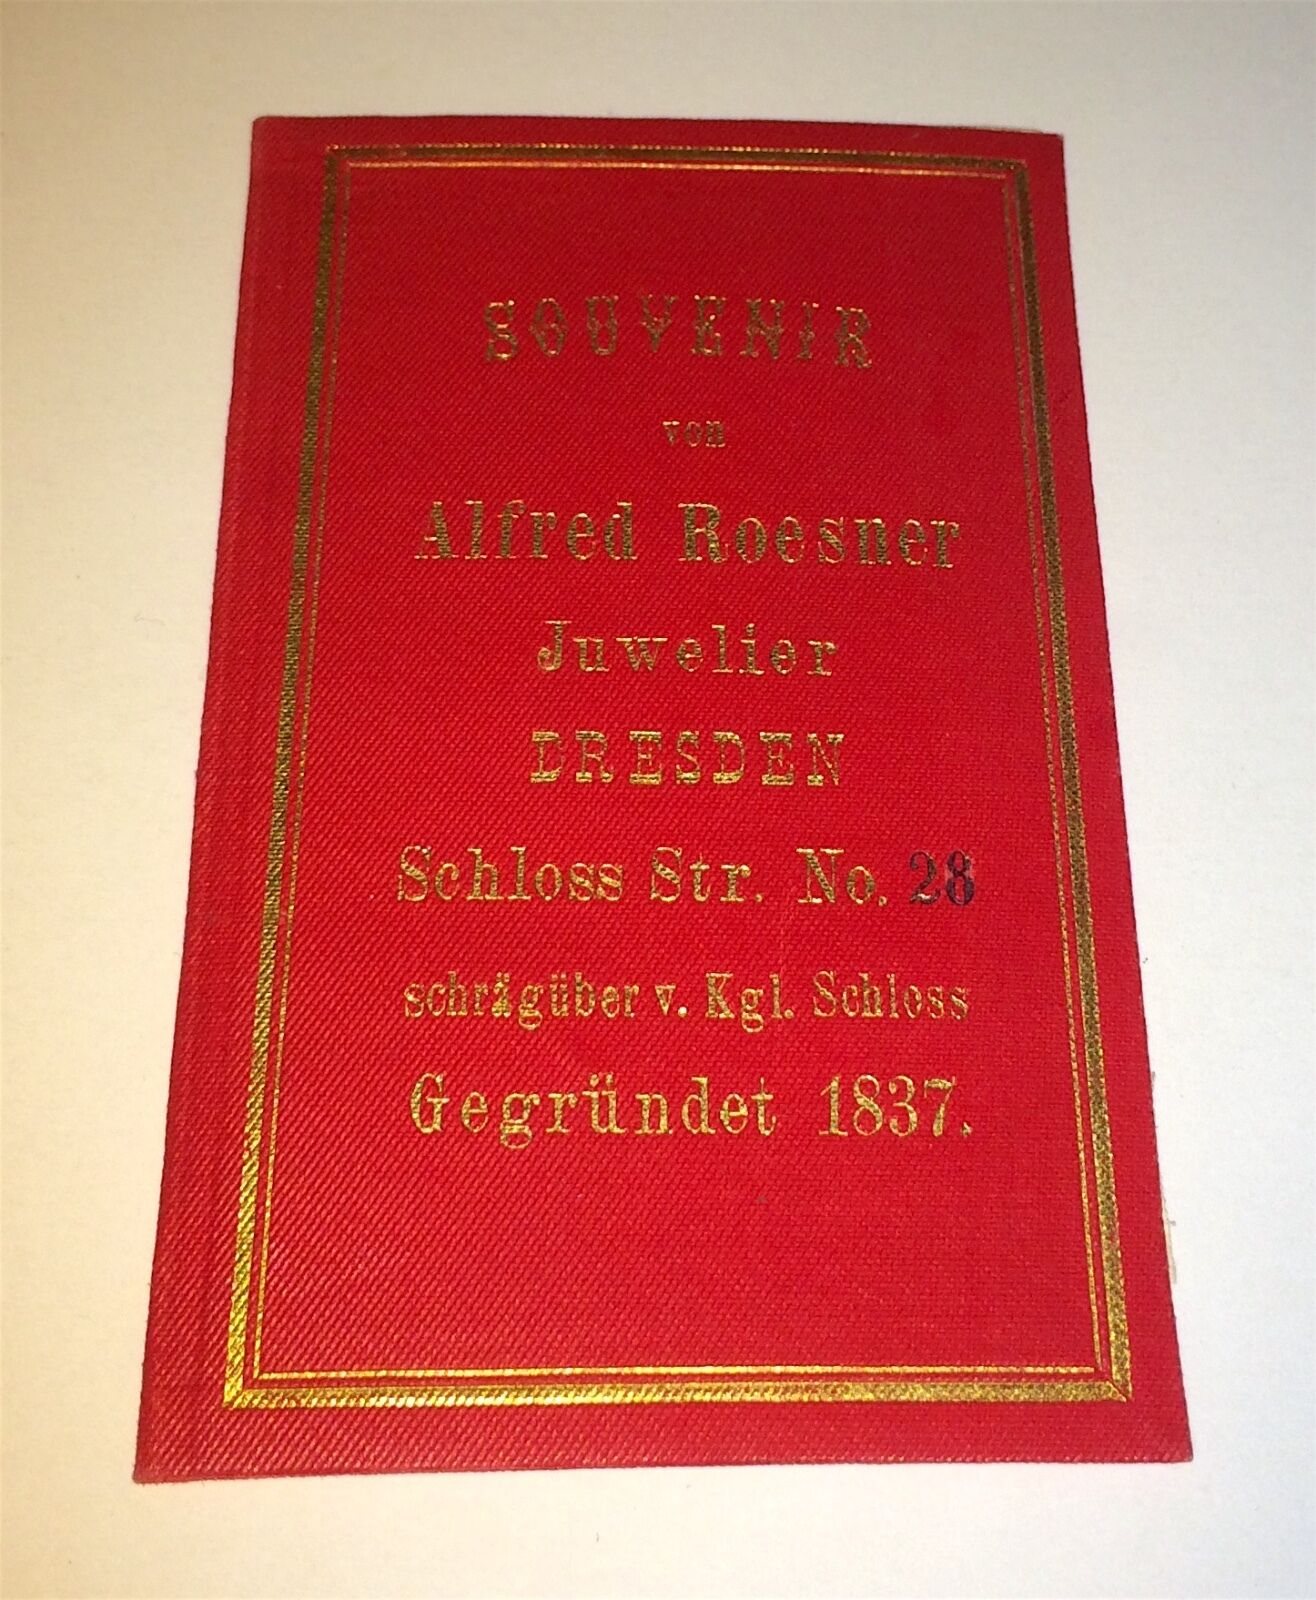 Rare Antique Souvenir Alfred Roesner German Victorian Jeweler Advertising Book